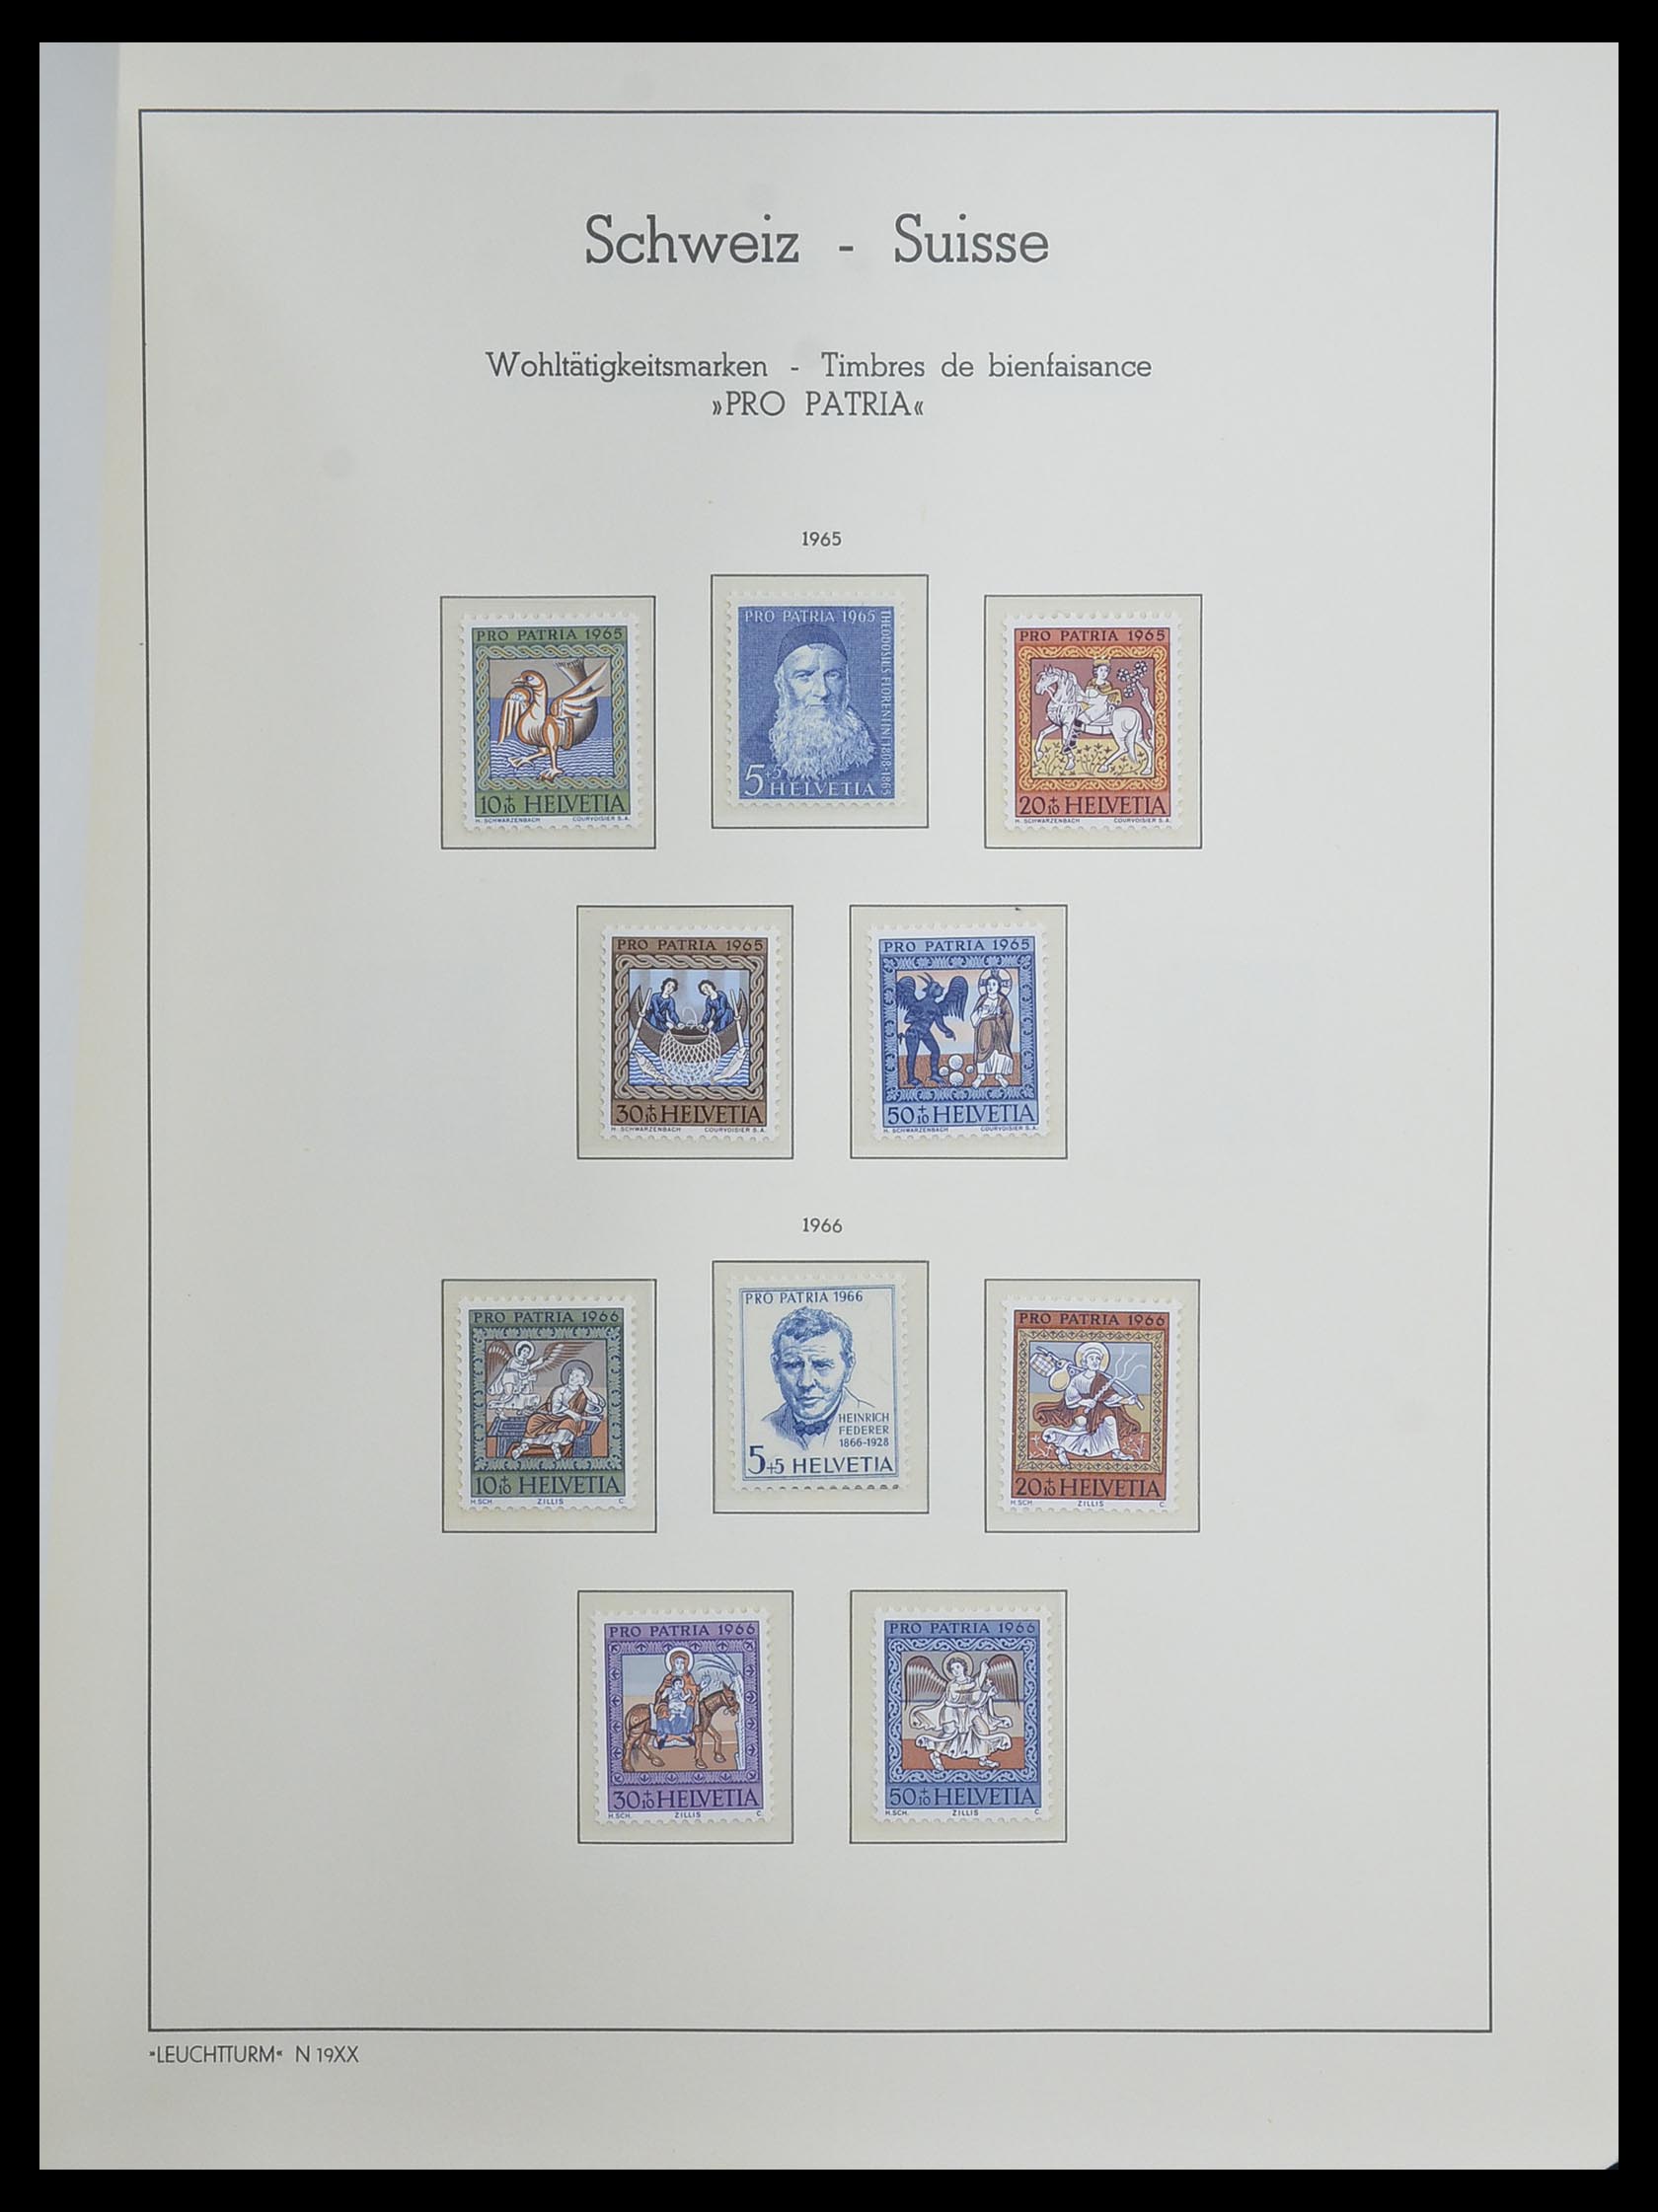 33603 054 - Stamp collection 33603 Switzerland 1862-1976.